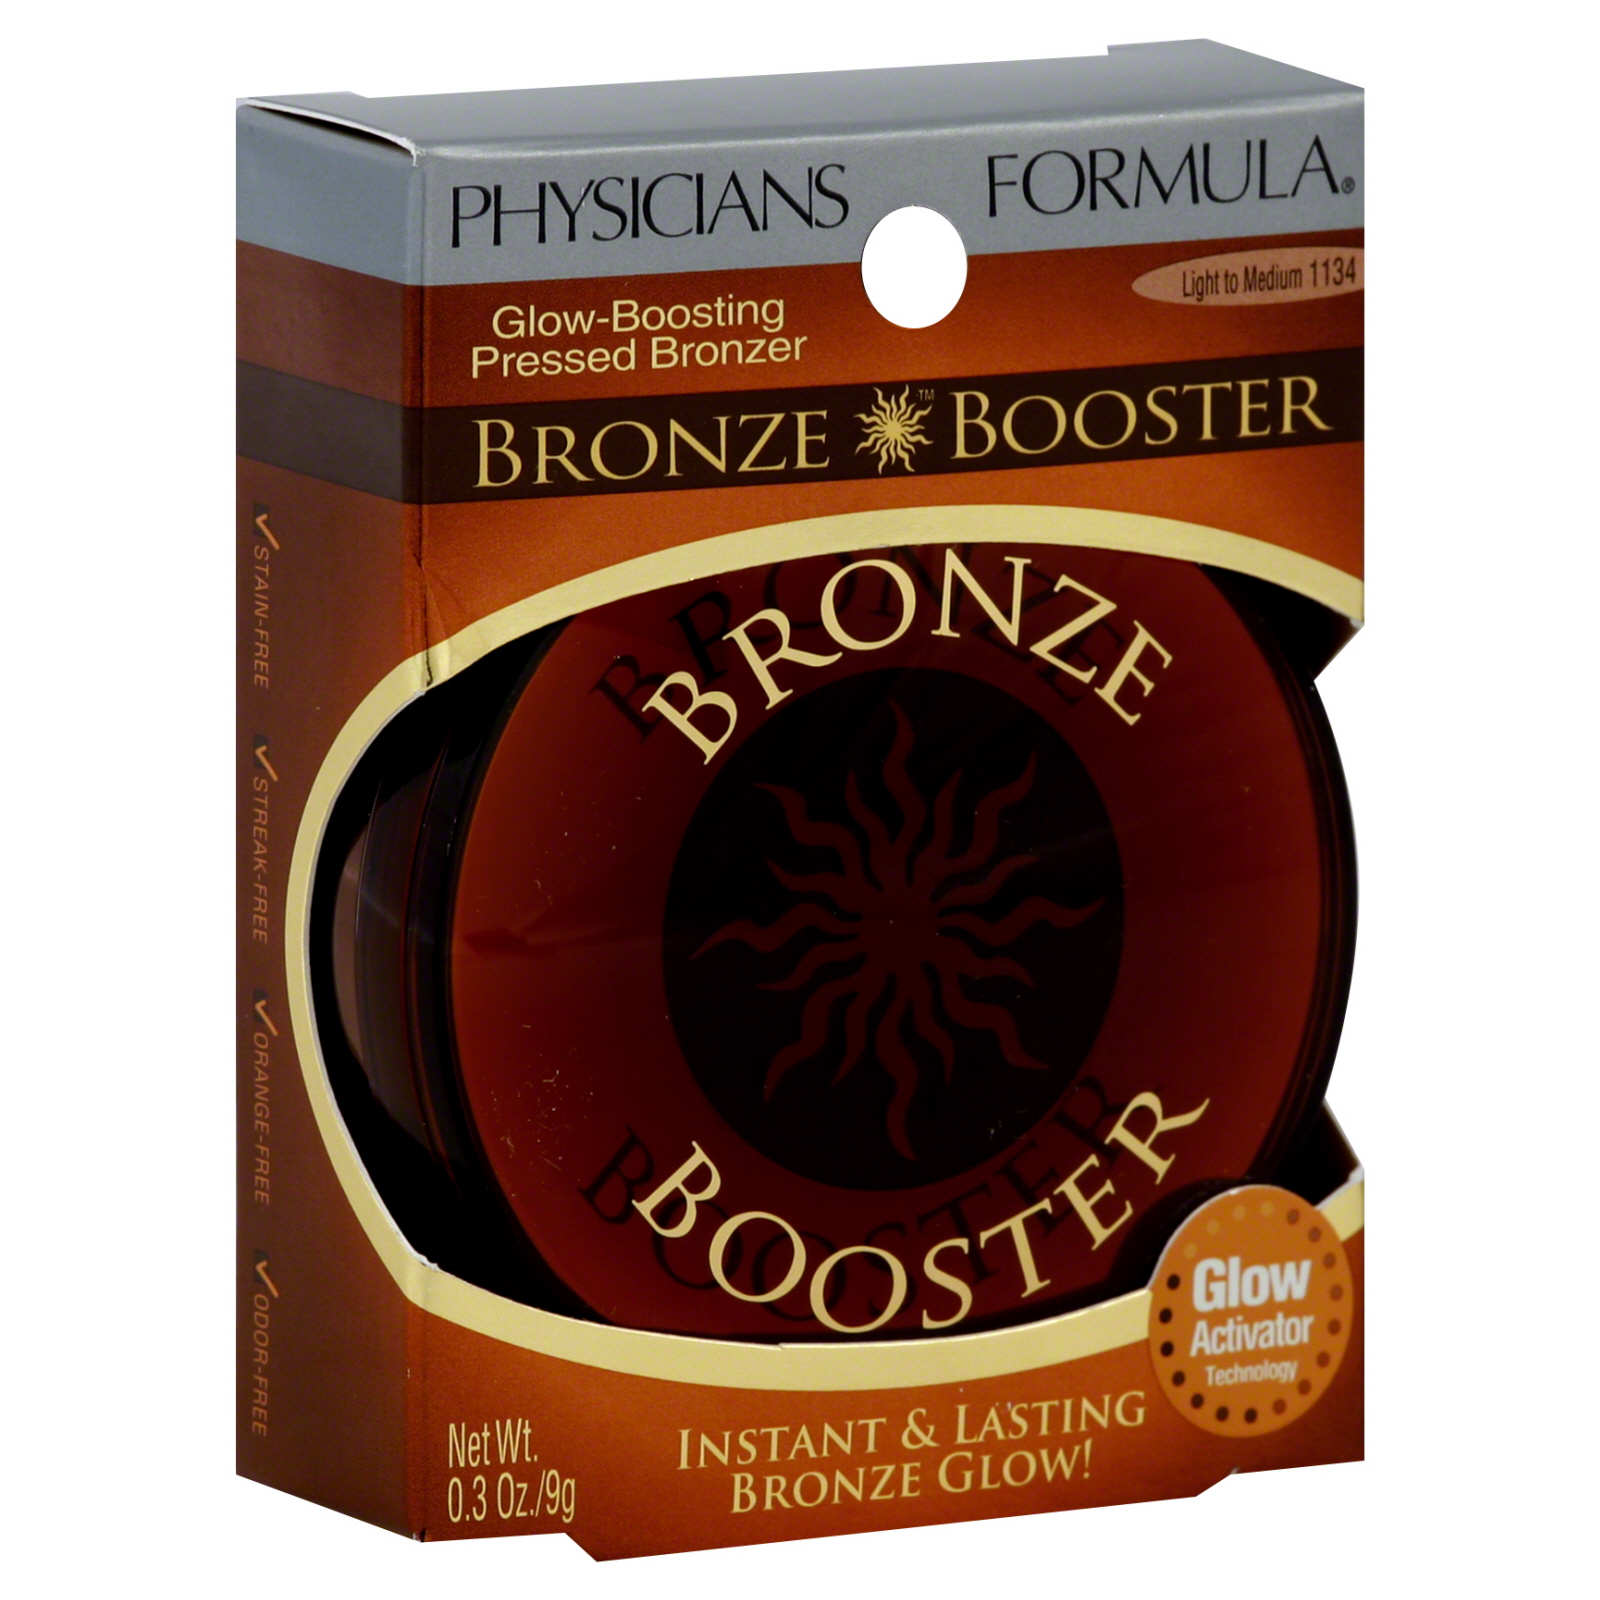 Bronze Booster Bronzer, Pressed, Glow-Boosting, Light to Medium 1134, 0.3 oz (9 g)